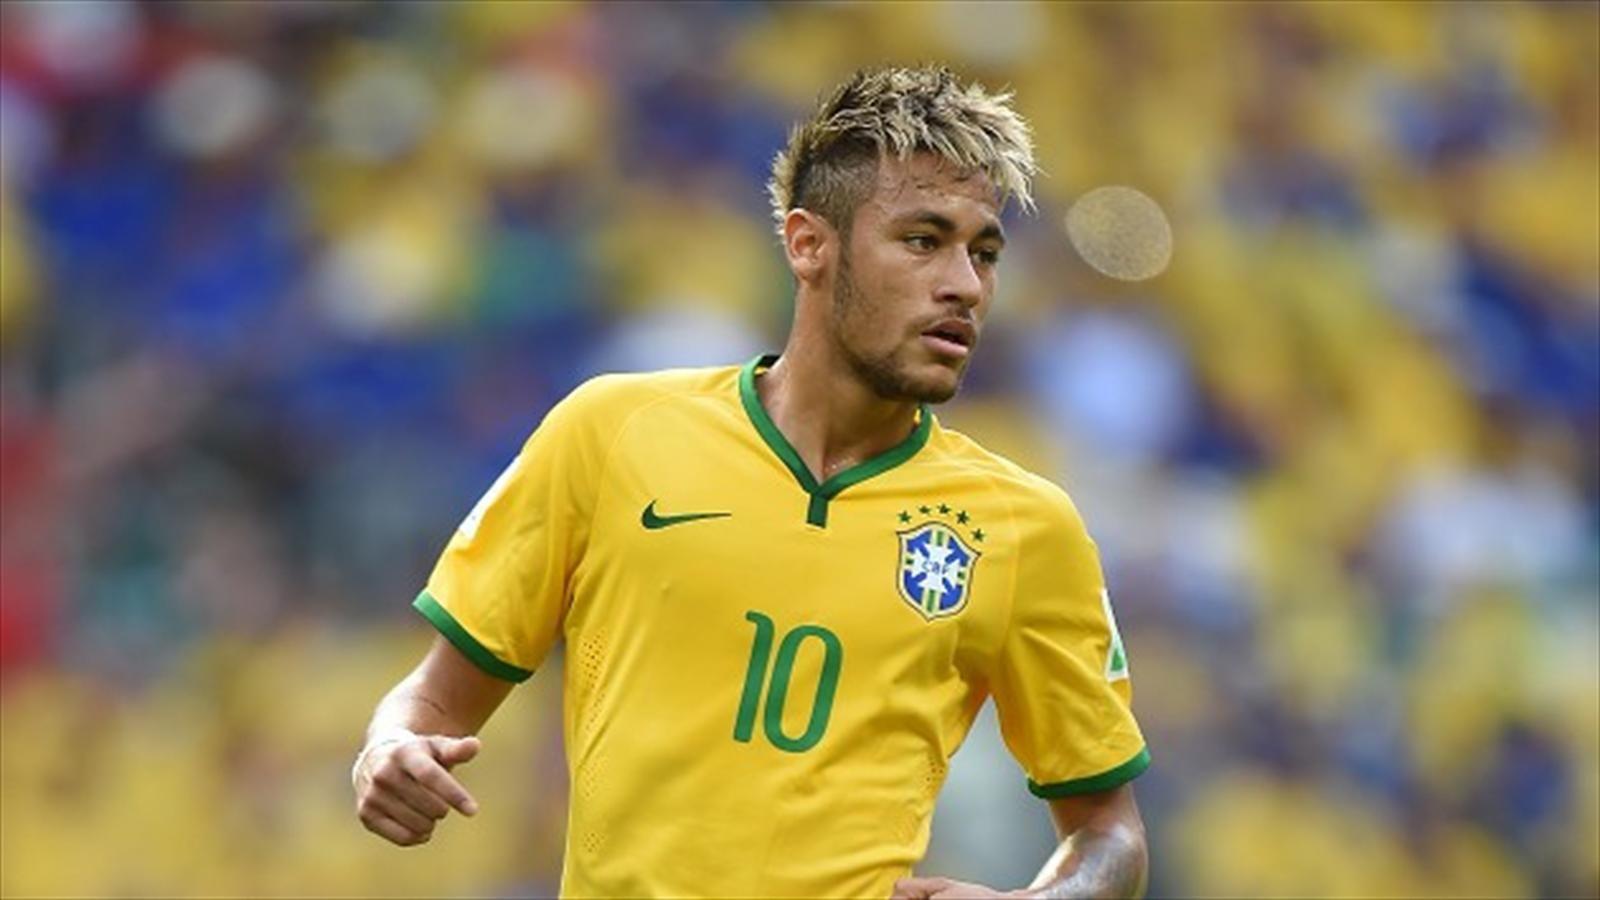 Brazil's Neymar has been linked with a move to Paris Saint-Germain. - Neymar